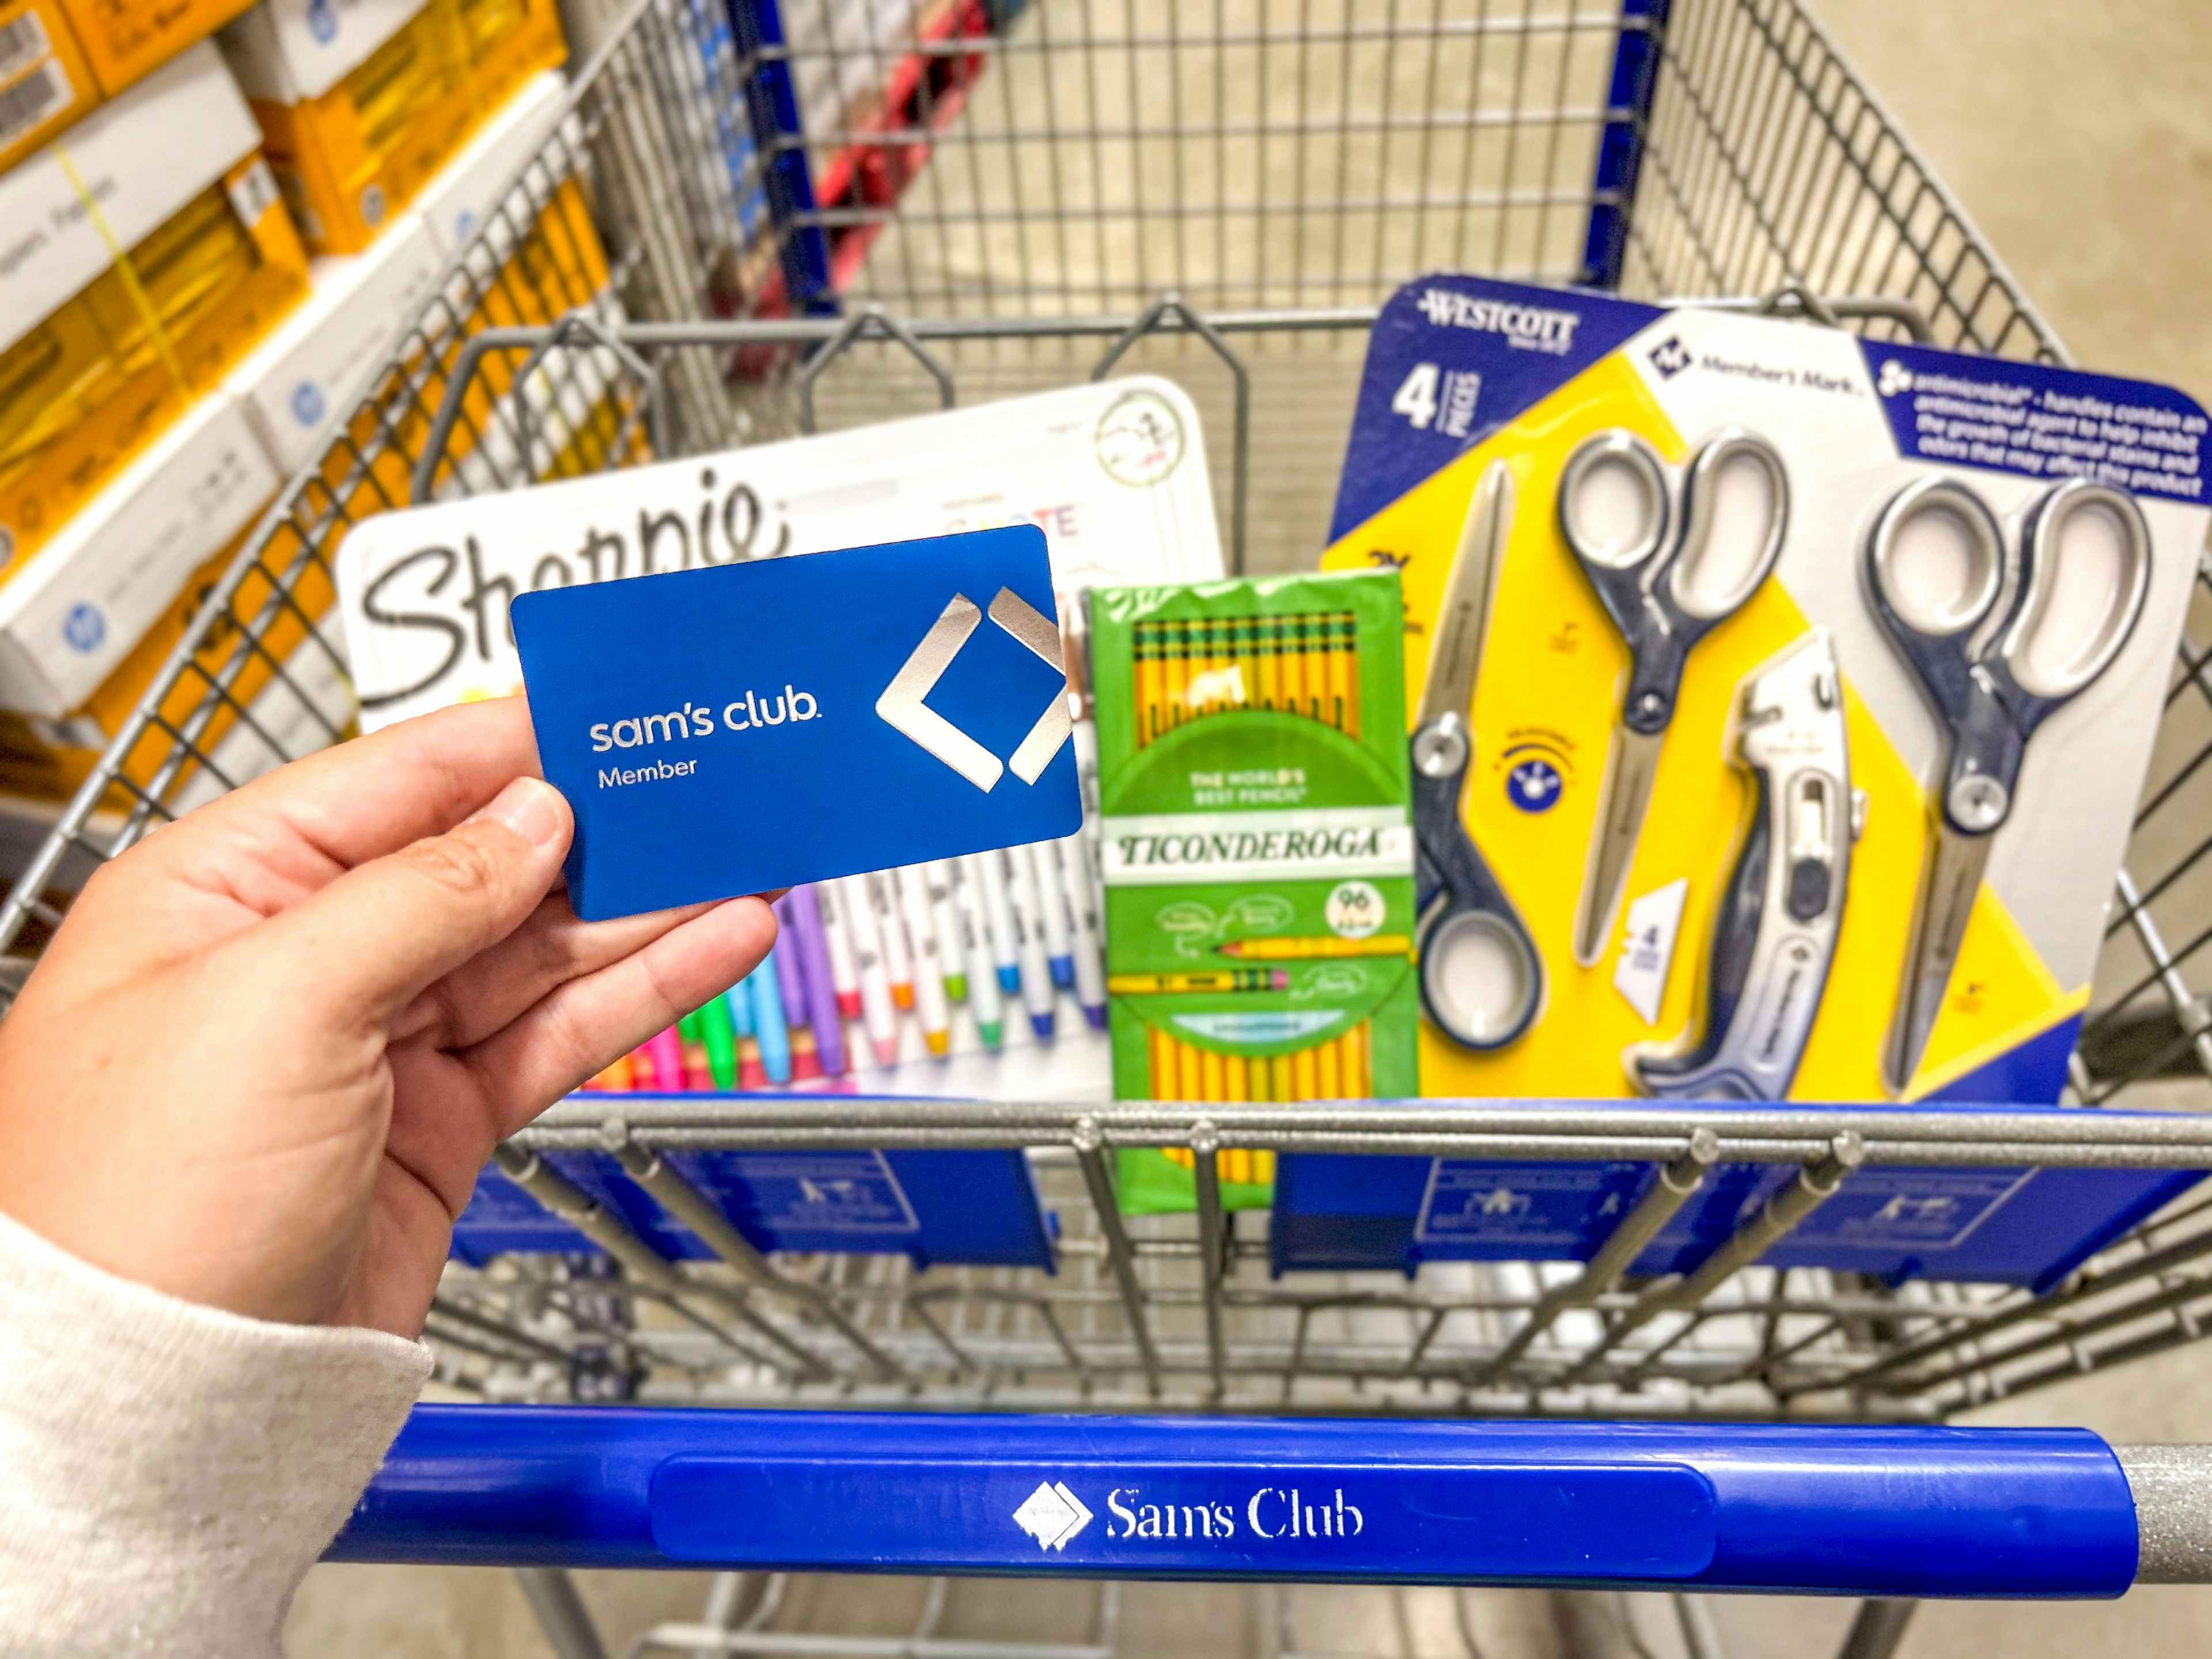 sams-club-school-supplies-member-card-kcl-2